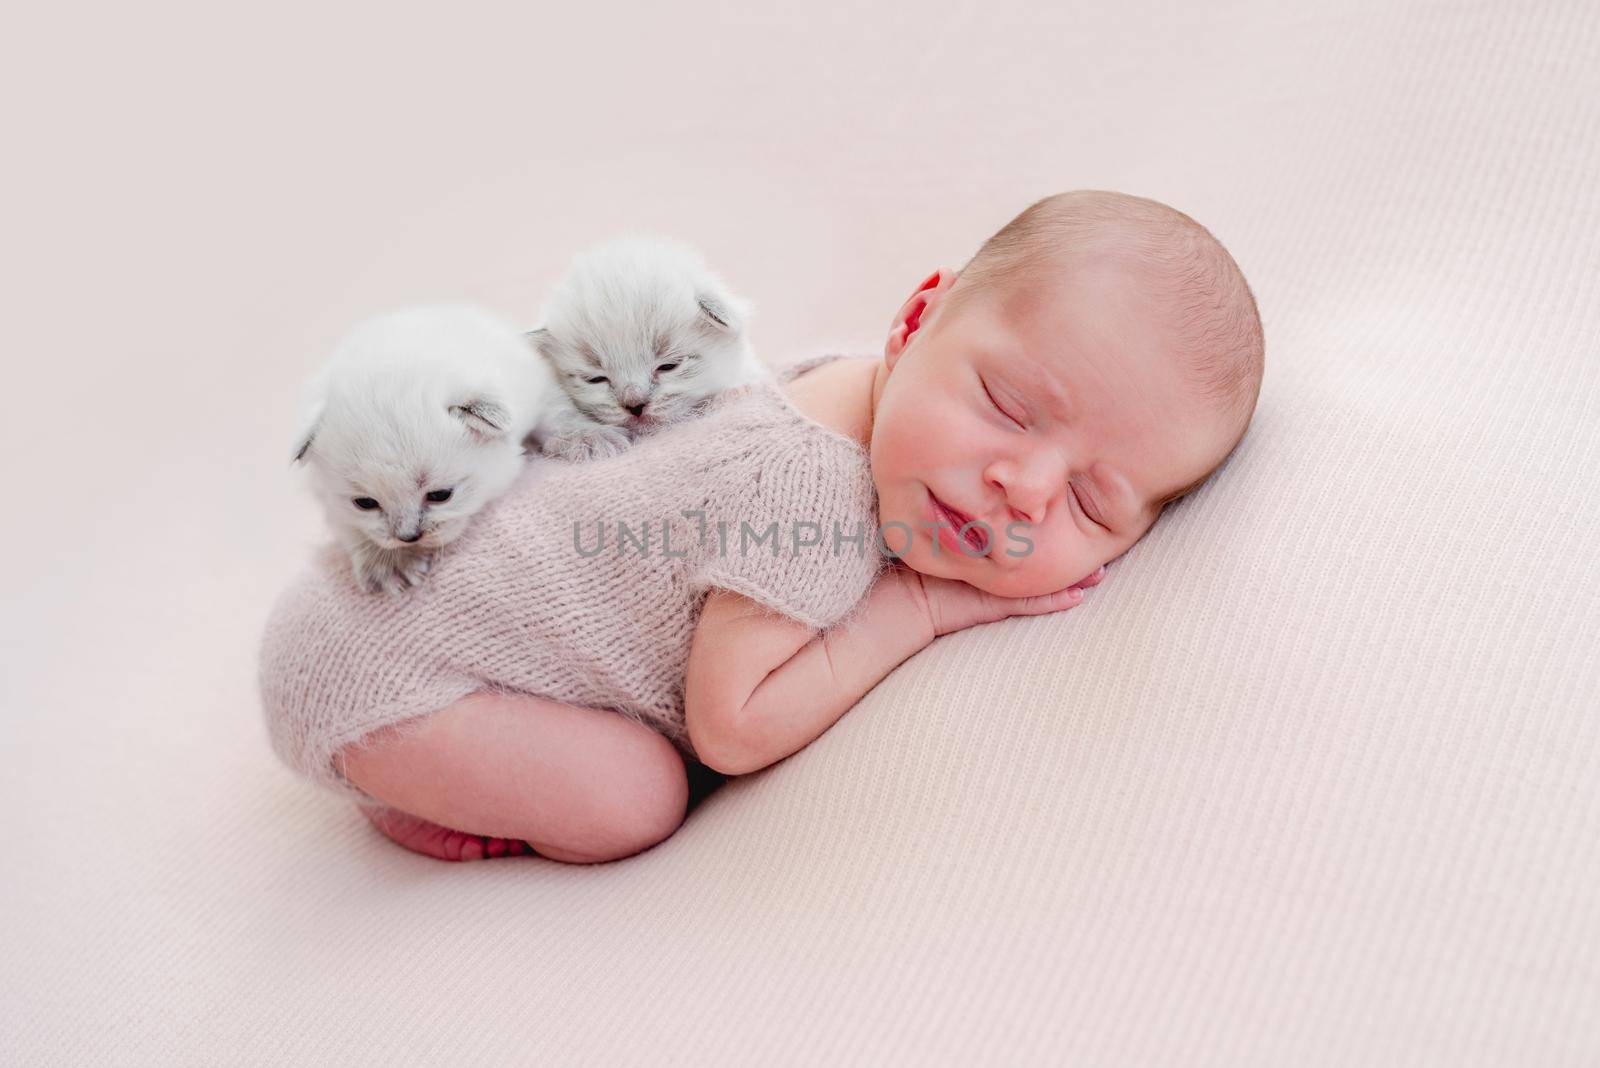 Newborn sleeping with kittens by tan4ikk1